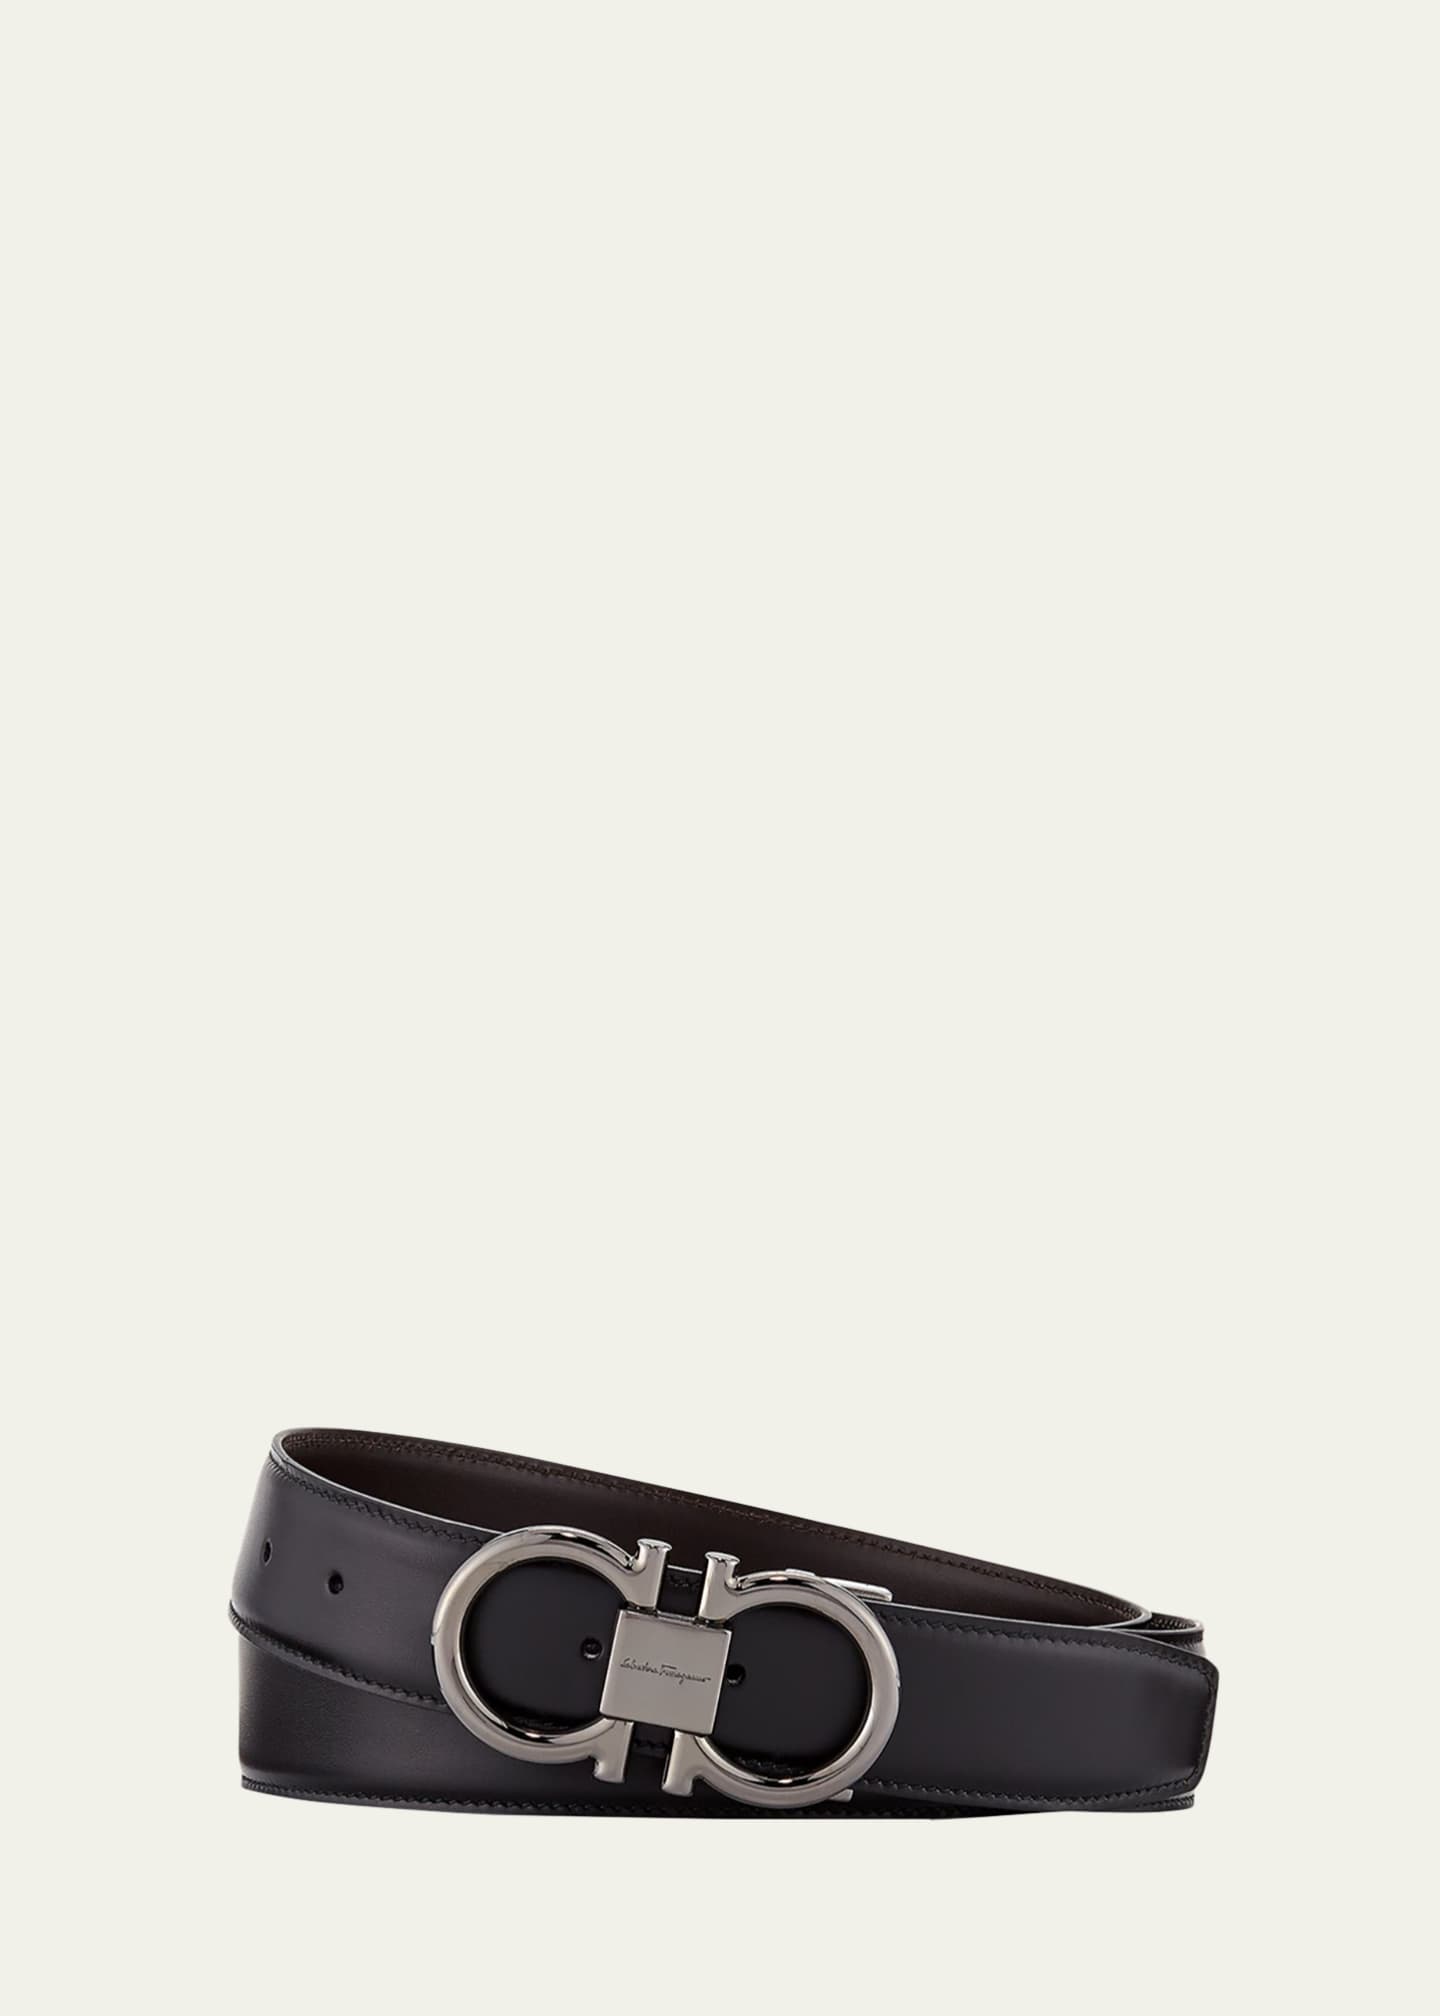 Gancini Black Leather Belt